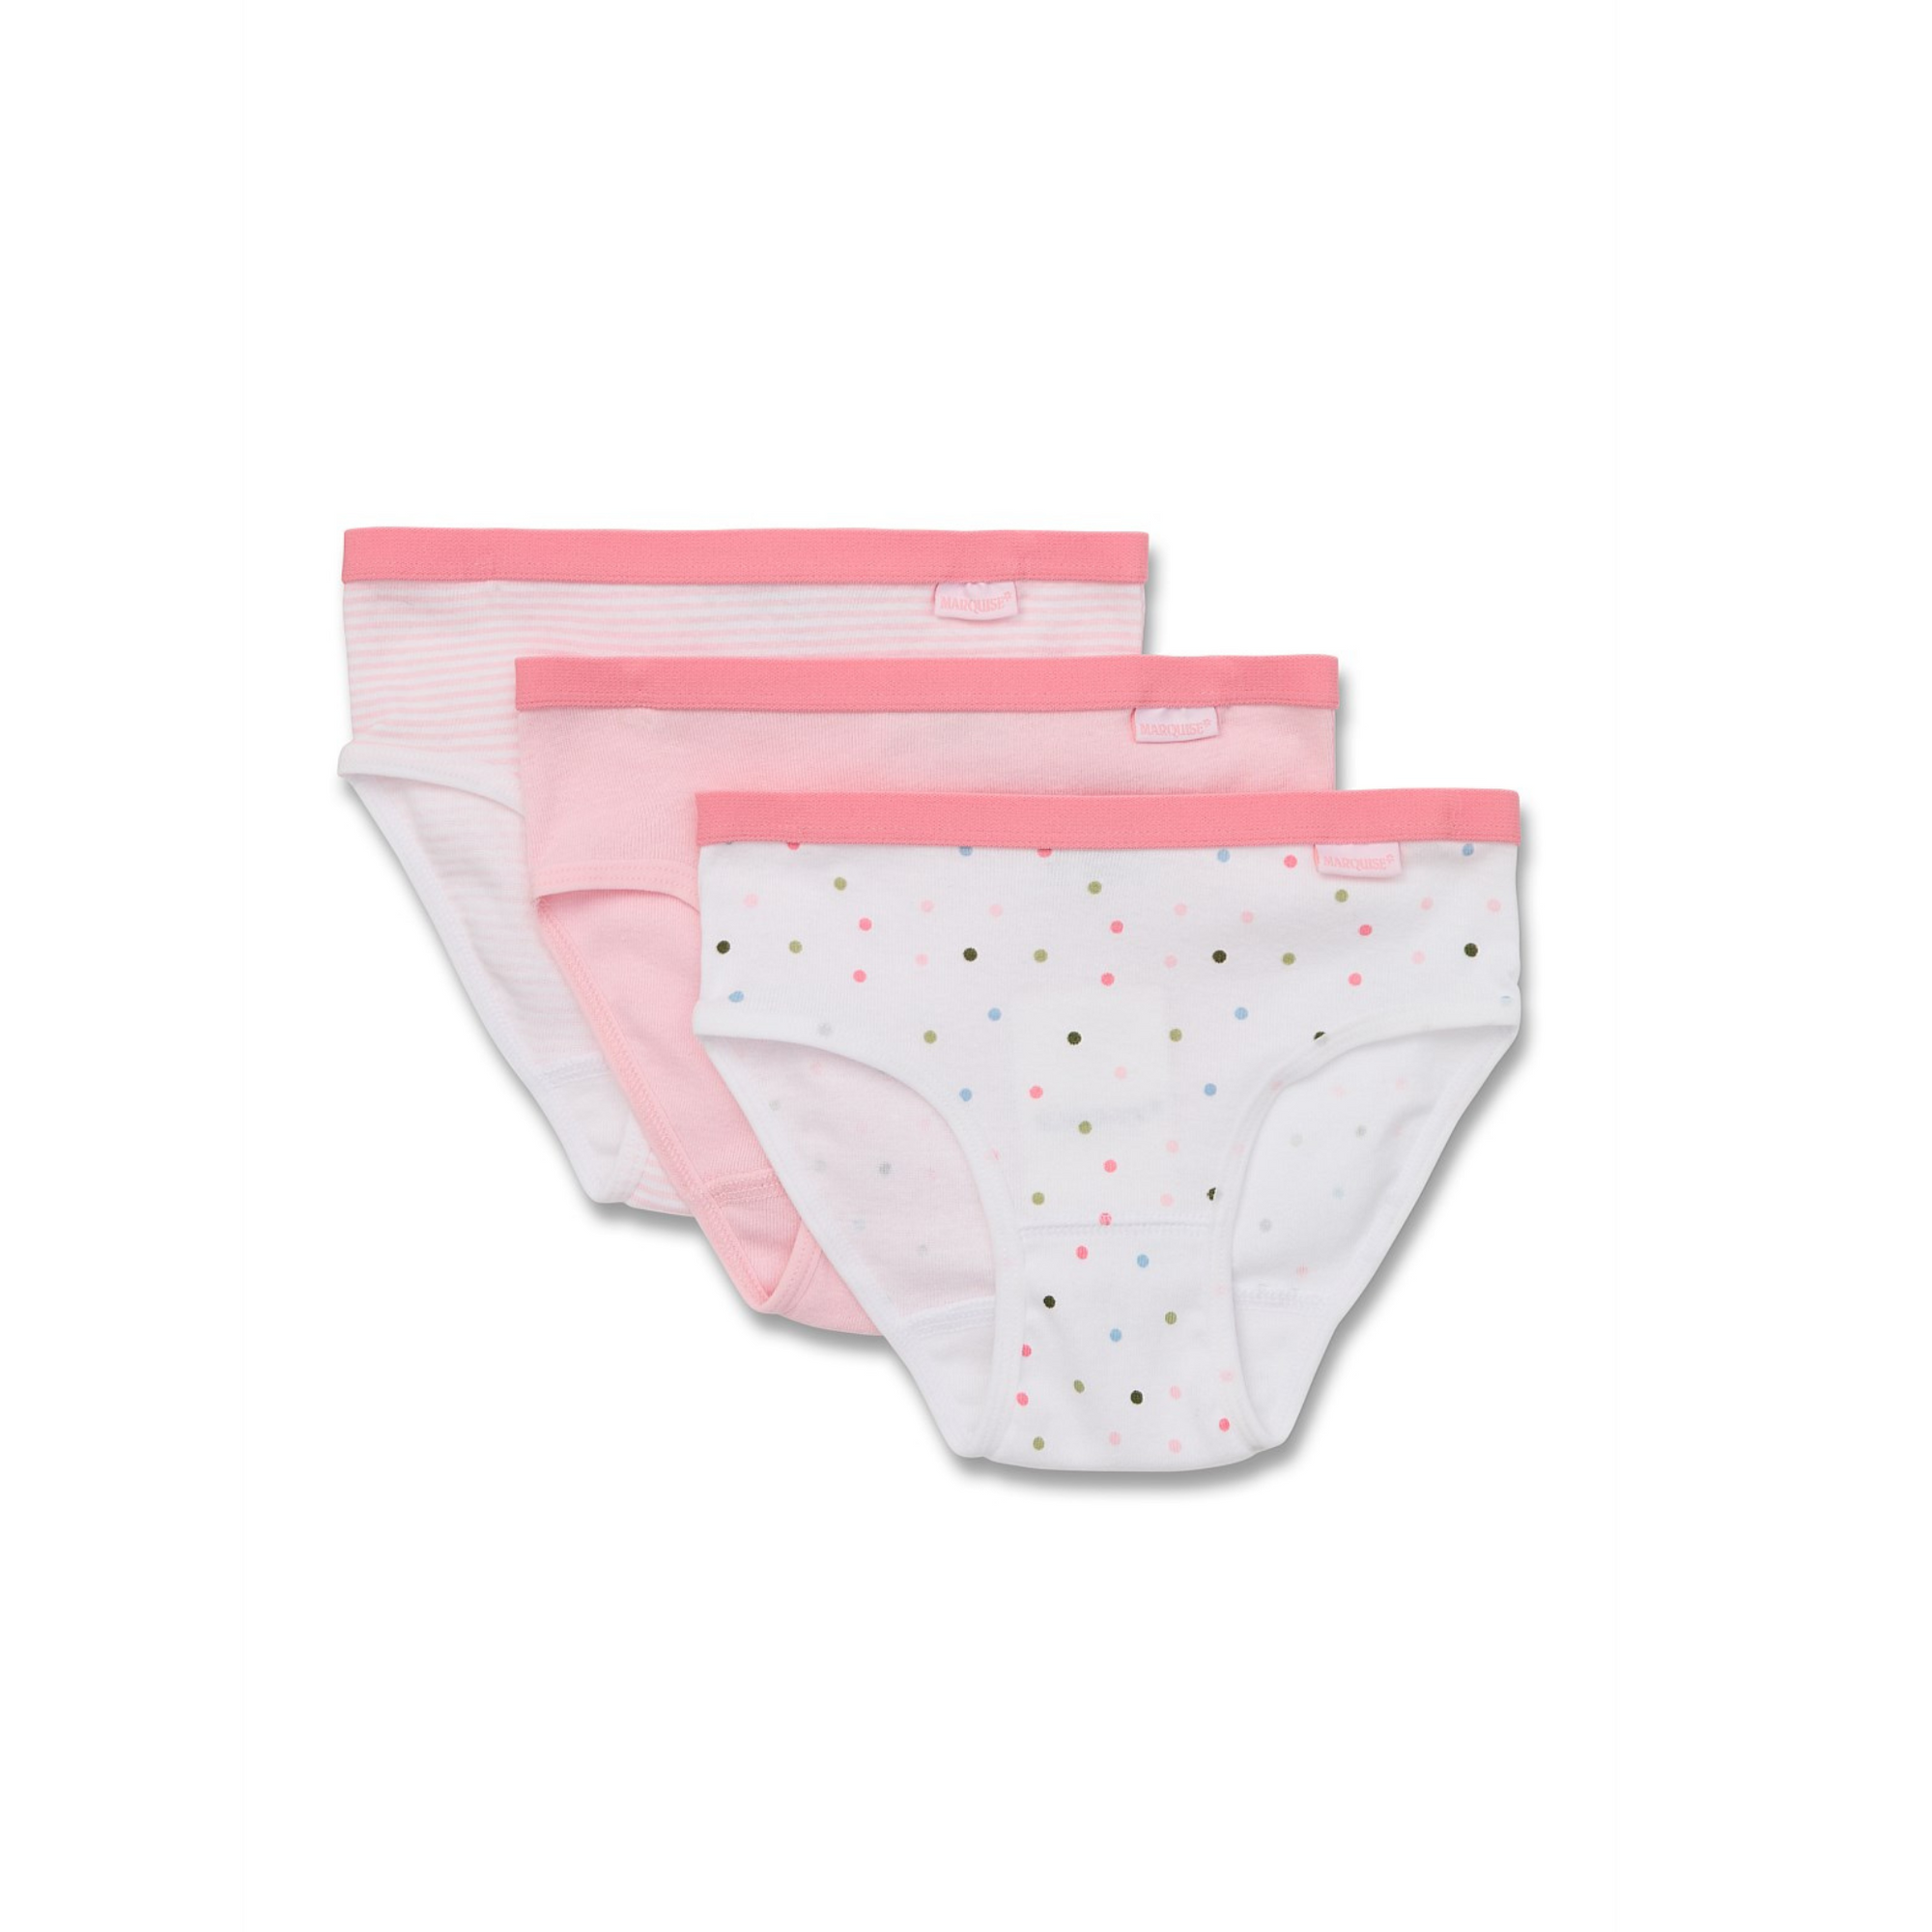 Marquise Girls Underwear - 3 Pack Pink Assorted